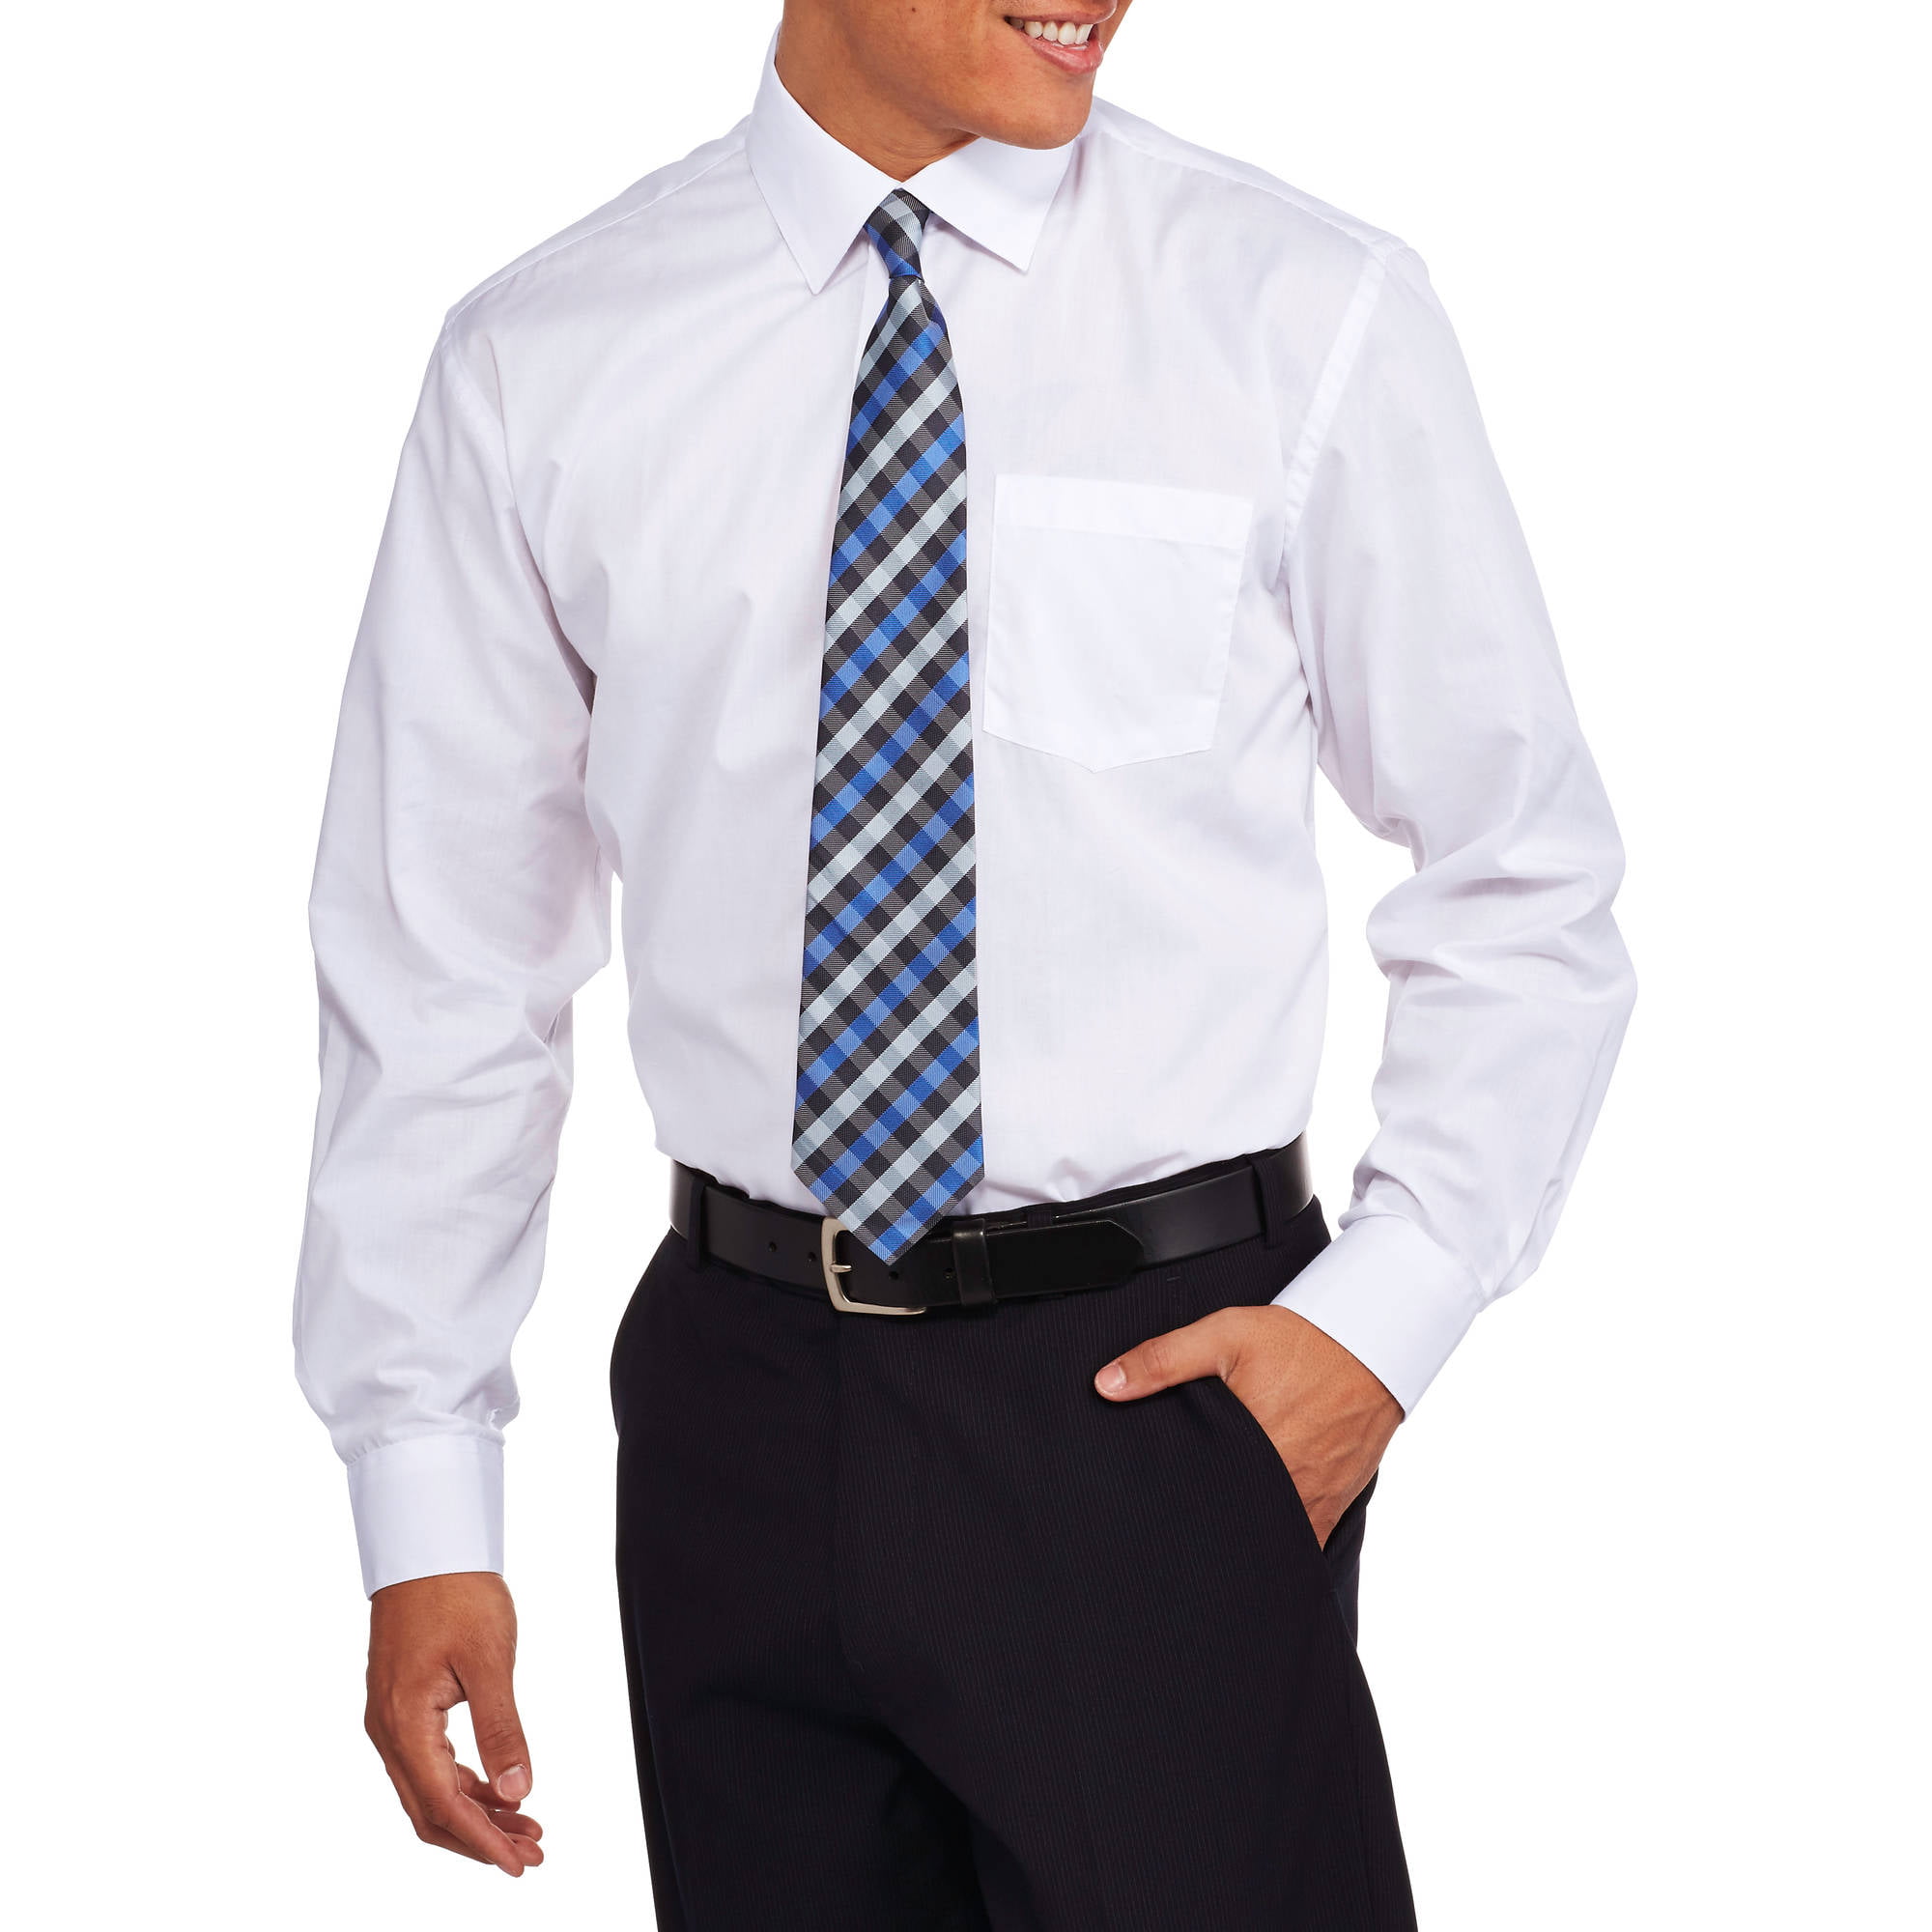 ONLINE - Men's 2-Piece Solid Dress Shirt and Tie Set ...